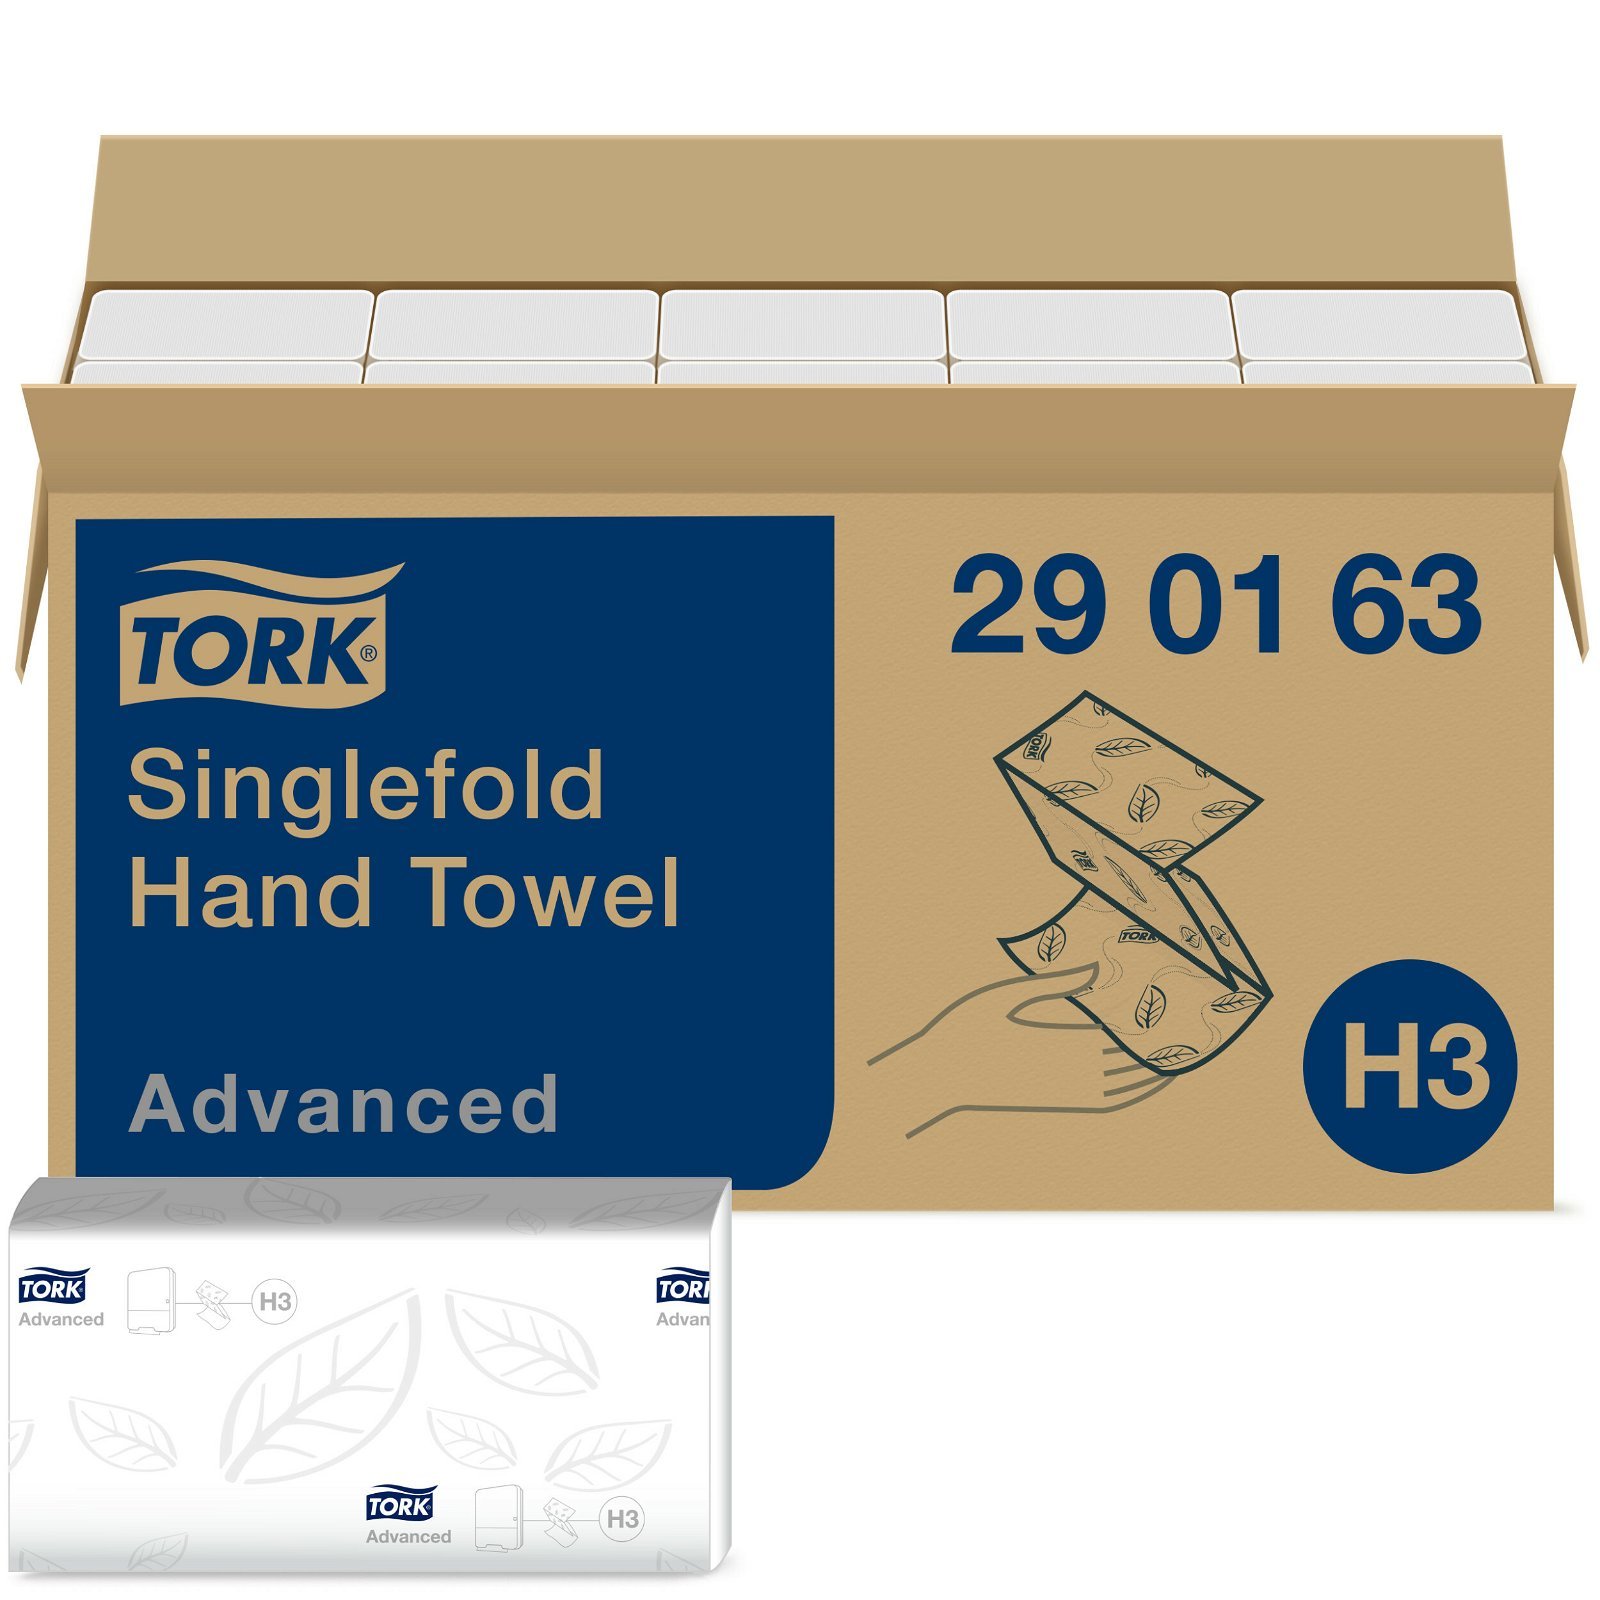 Tork Advanced håndklædeark H3 C-fold 2Lag